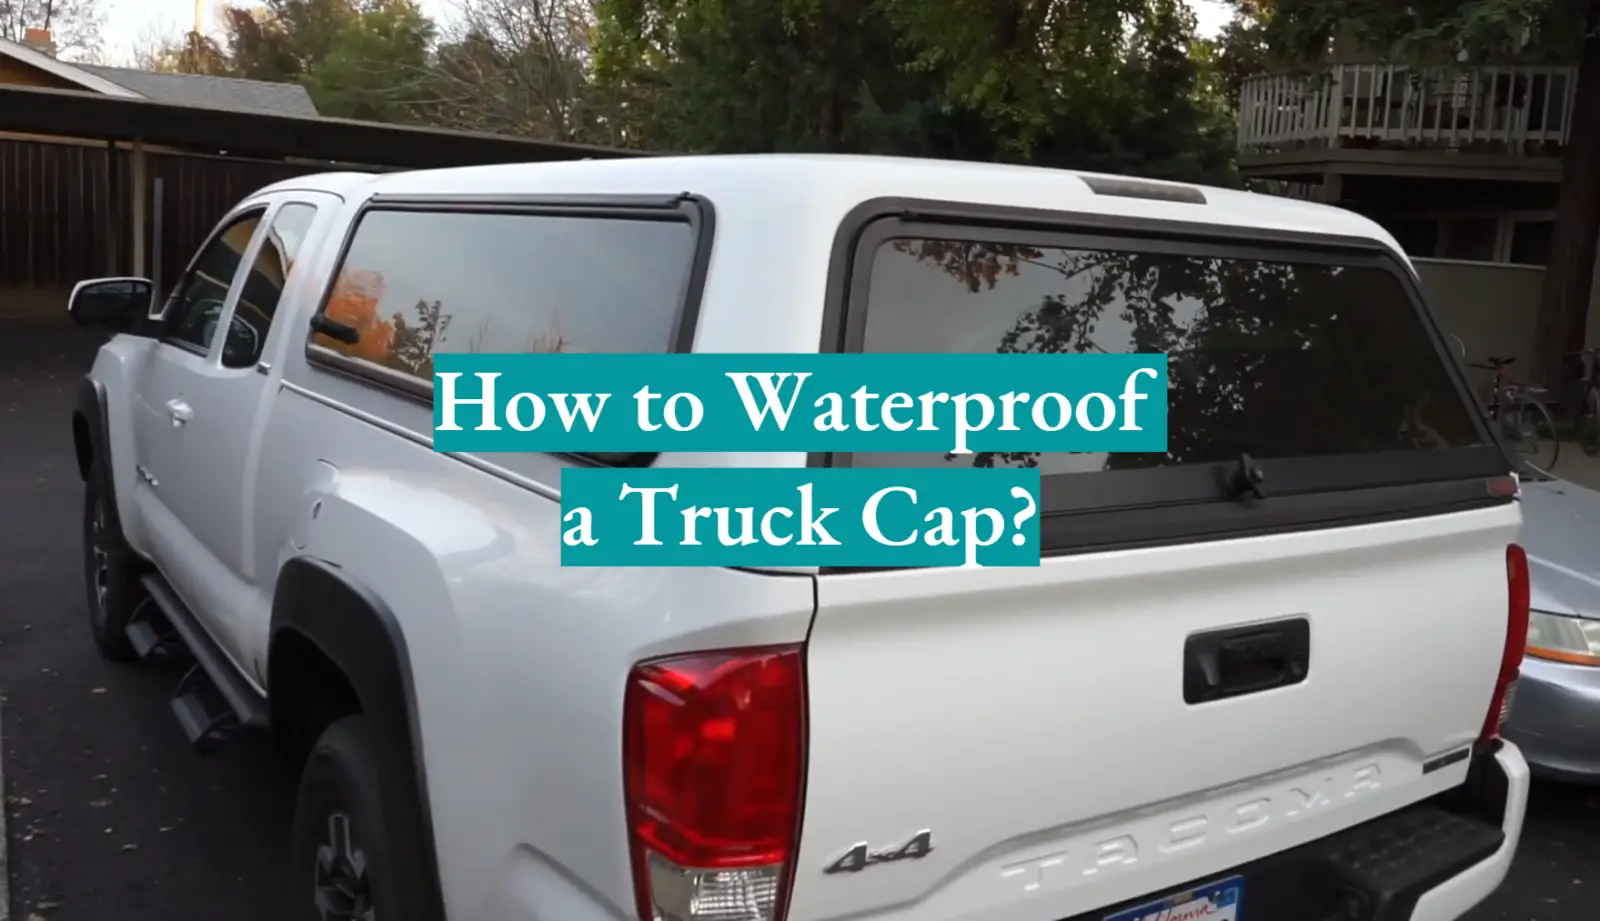 How to Waterproof a Truck Cap?